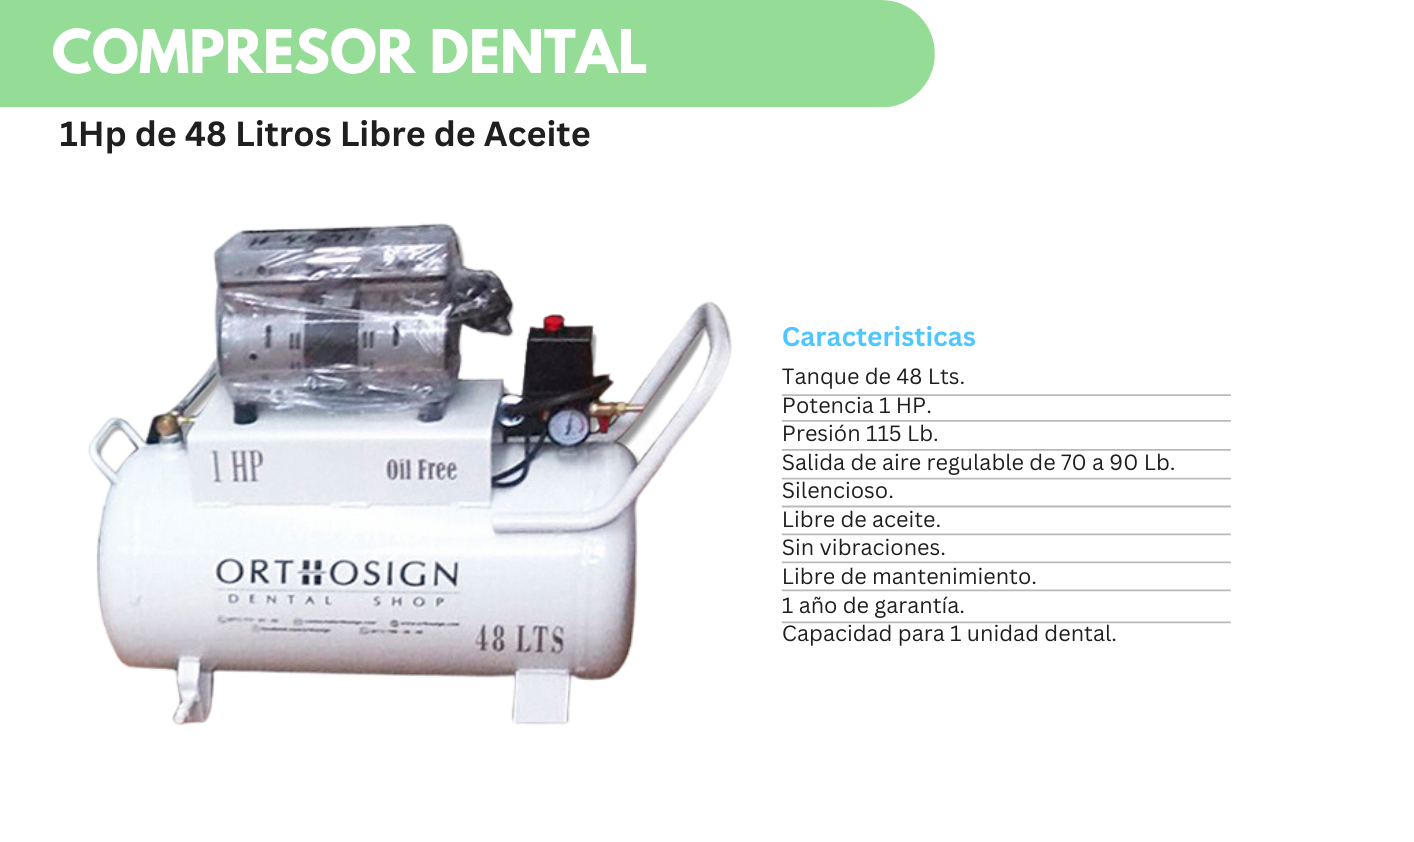 Compresor Dental 1Hp de 48 Litros Libre de Aceite